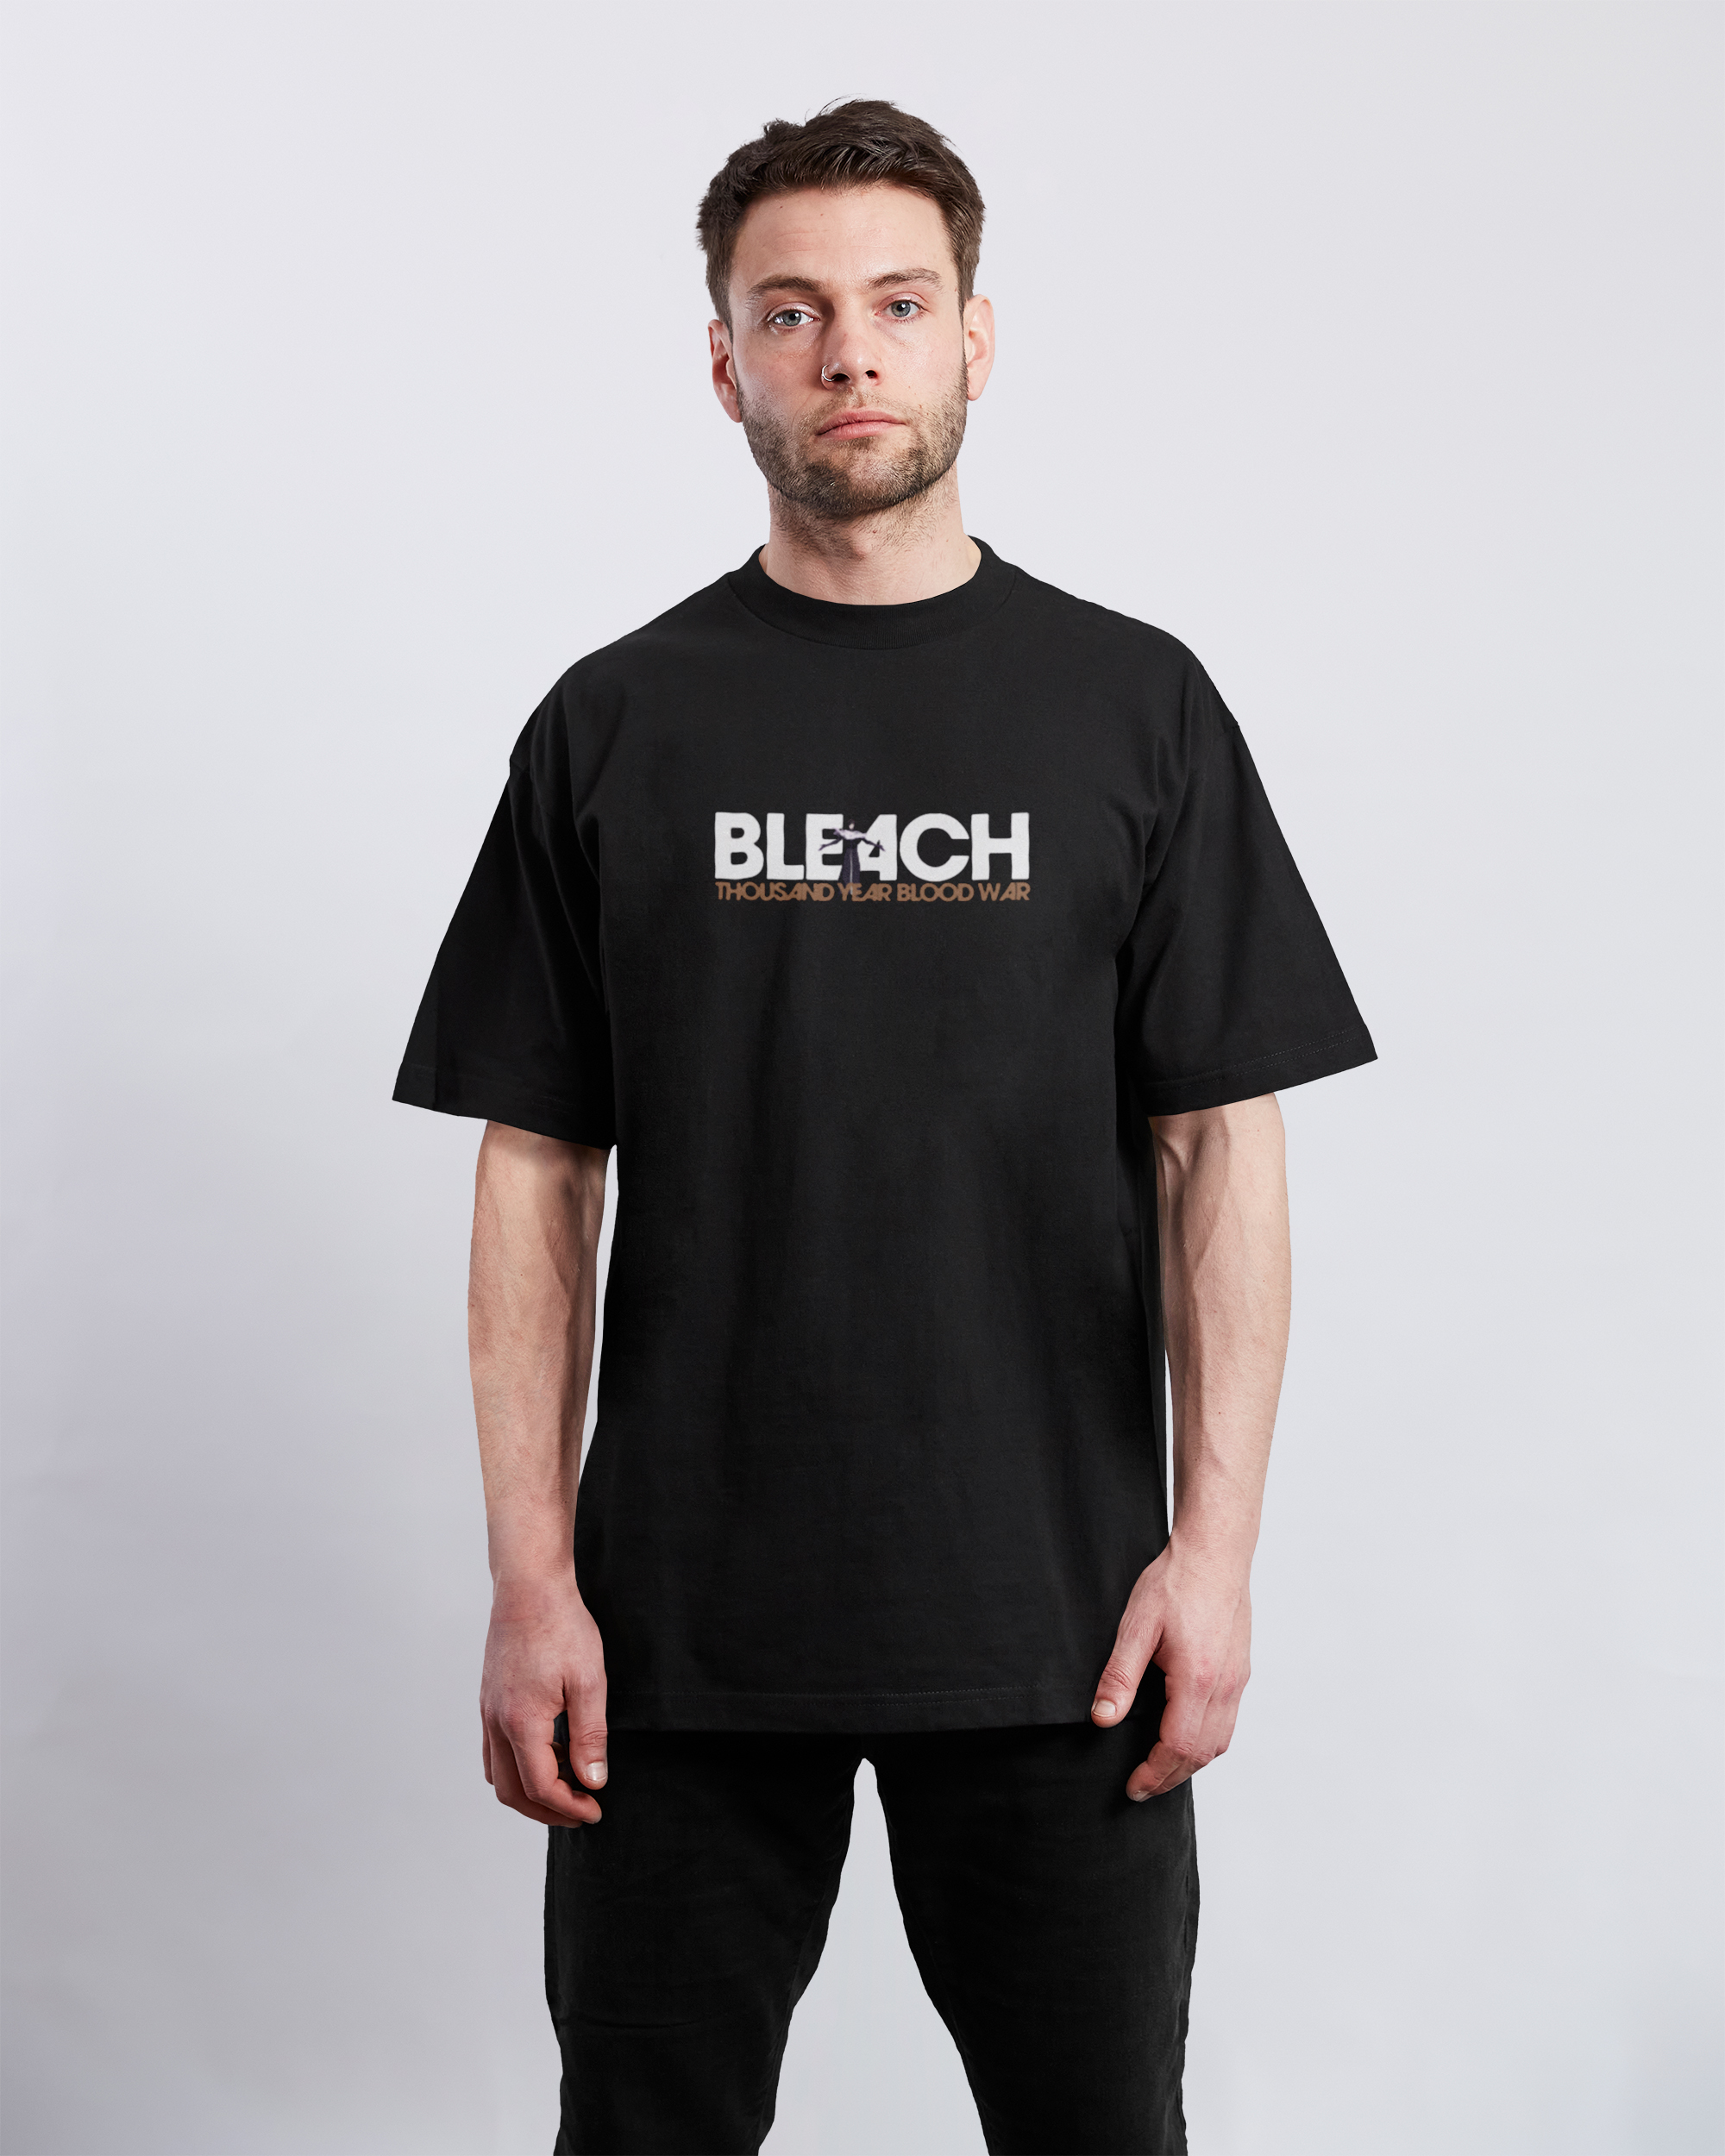 Sosuke Aizen Bleach | Black T-Shirt TYBW